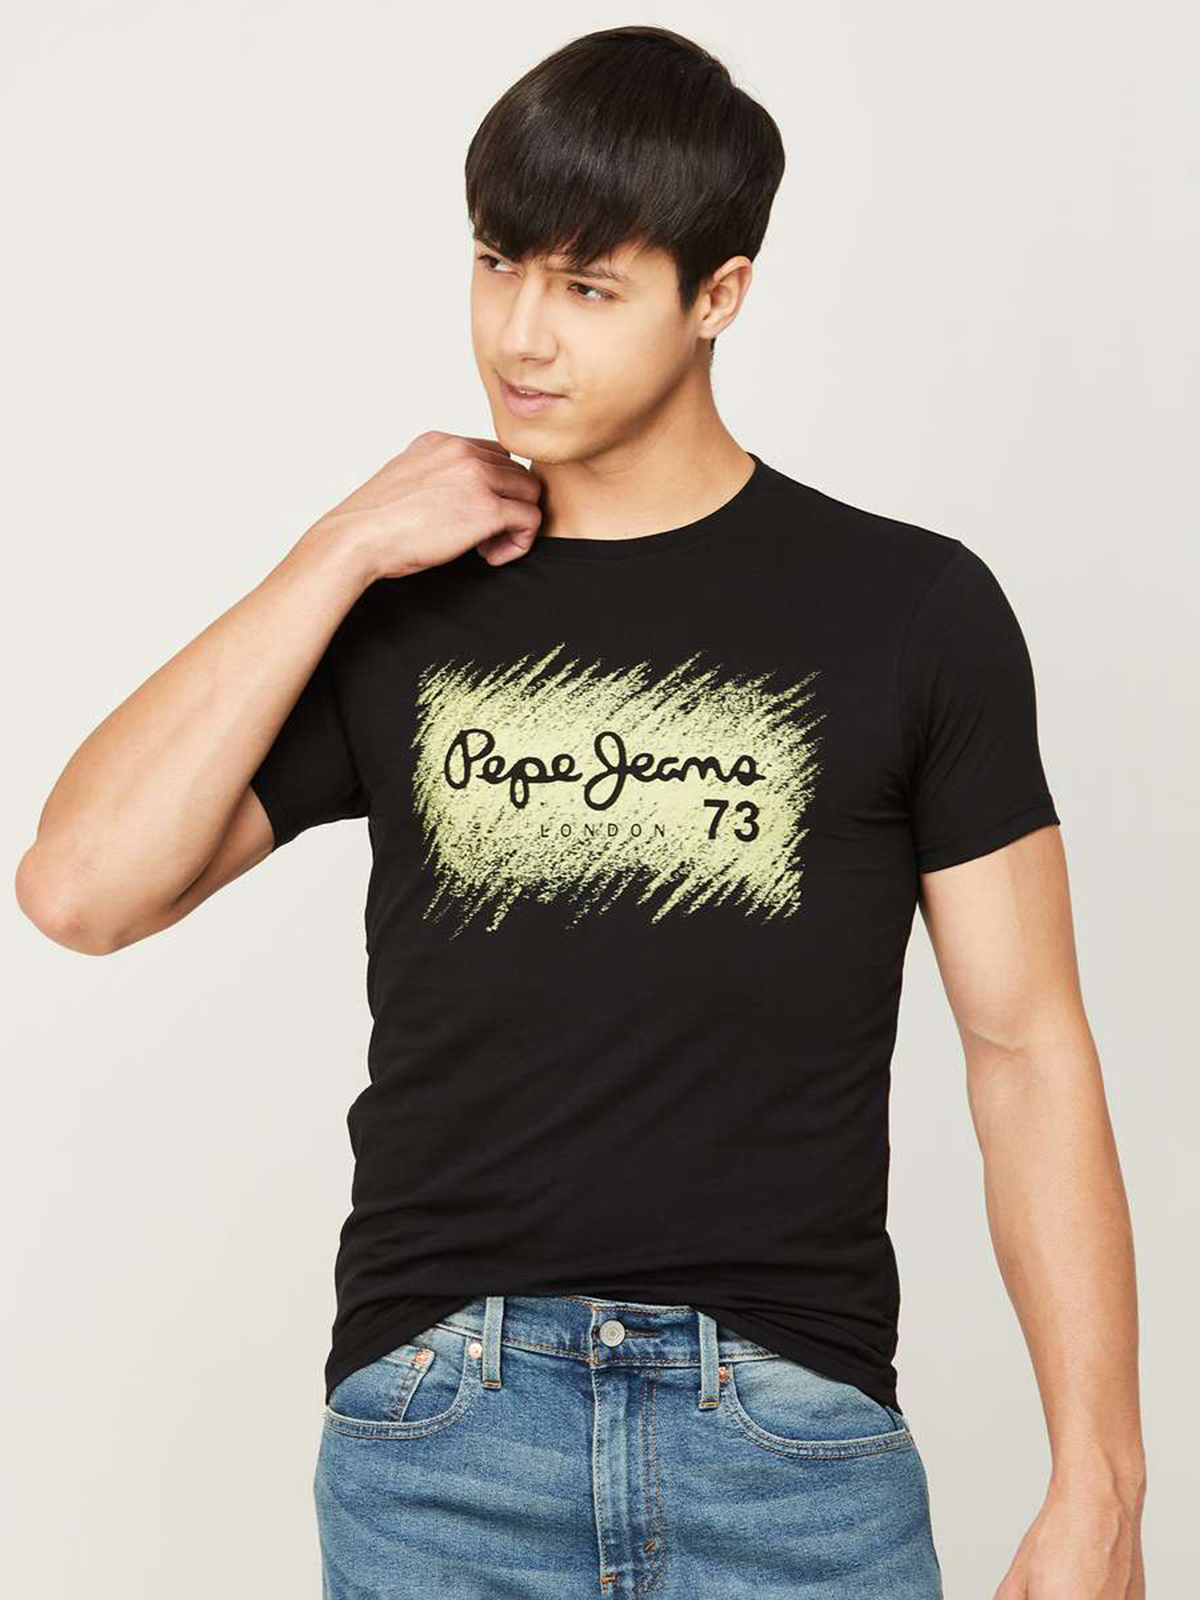 Pepe Jeans black printed t G3-MTS15414 - shirt